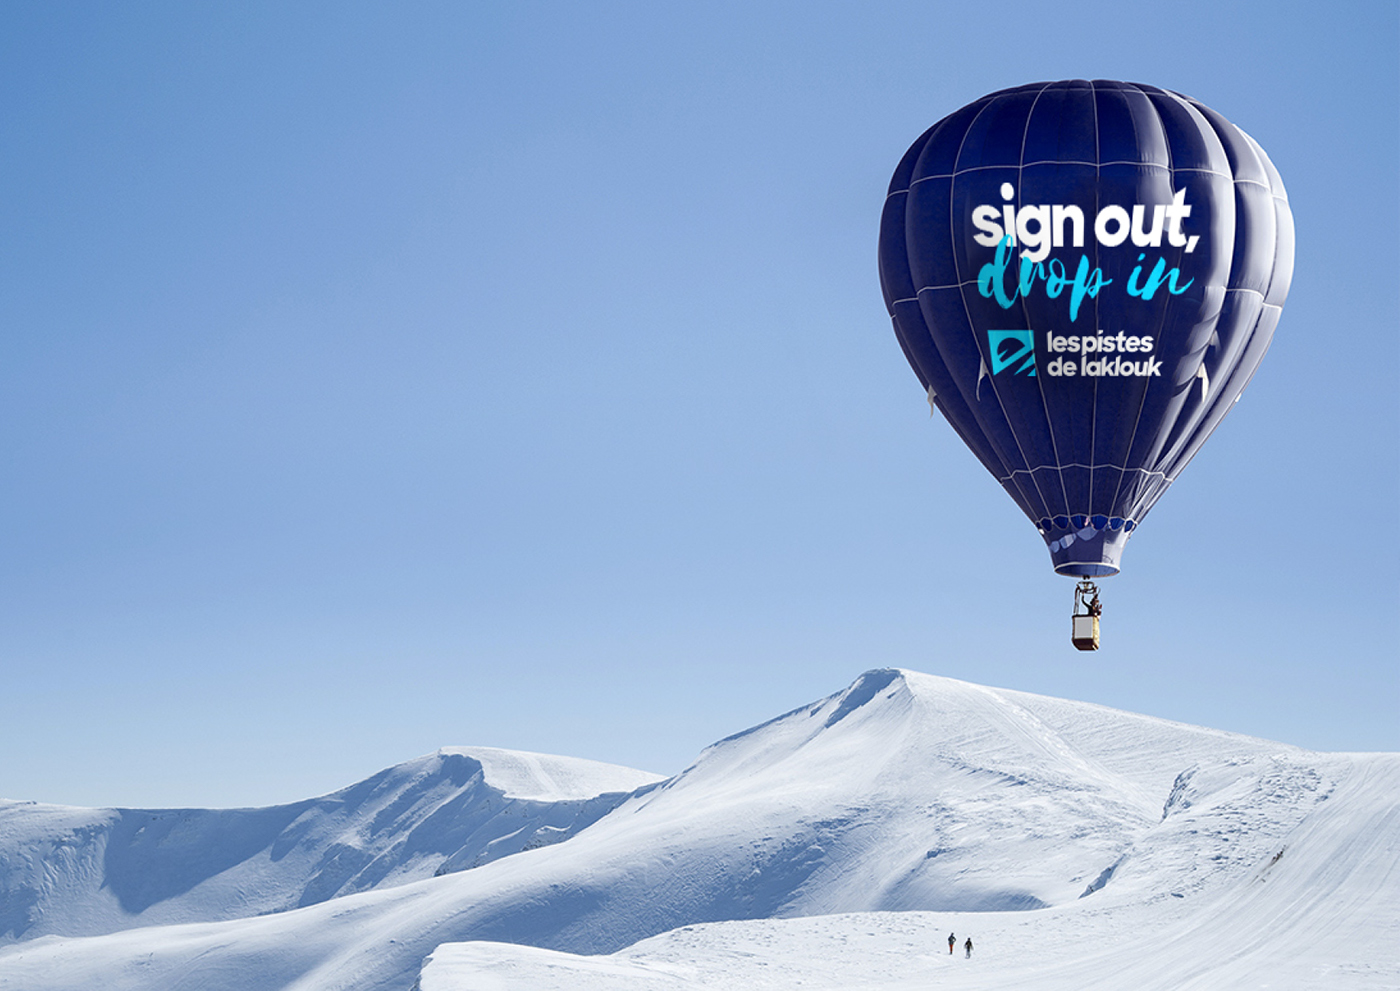 pistes slope laklouk lebanon Ski snow brand design blue